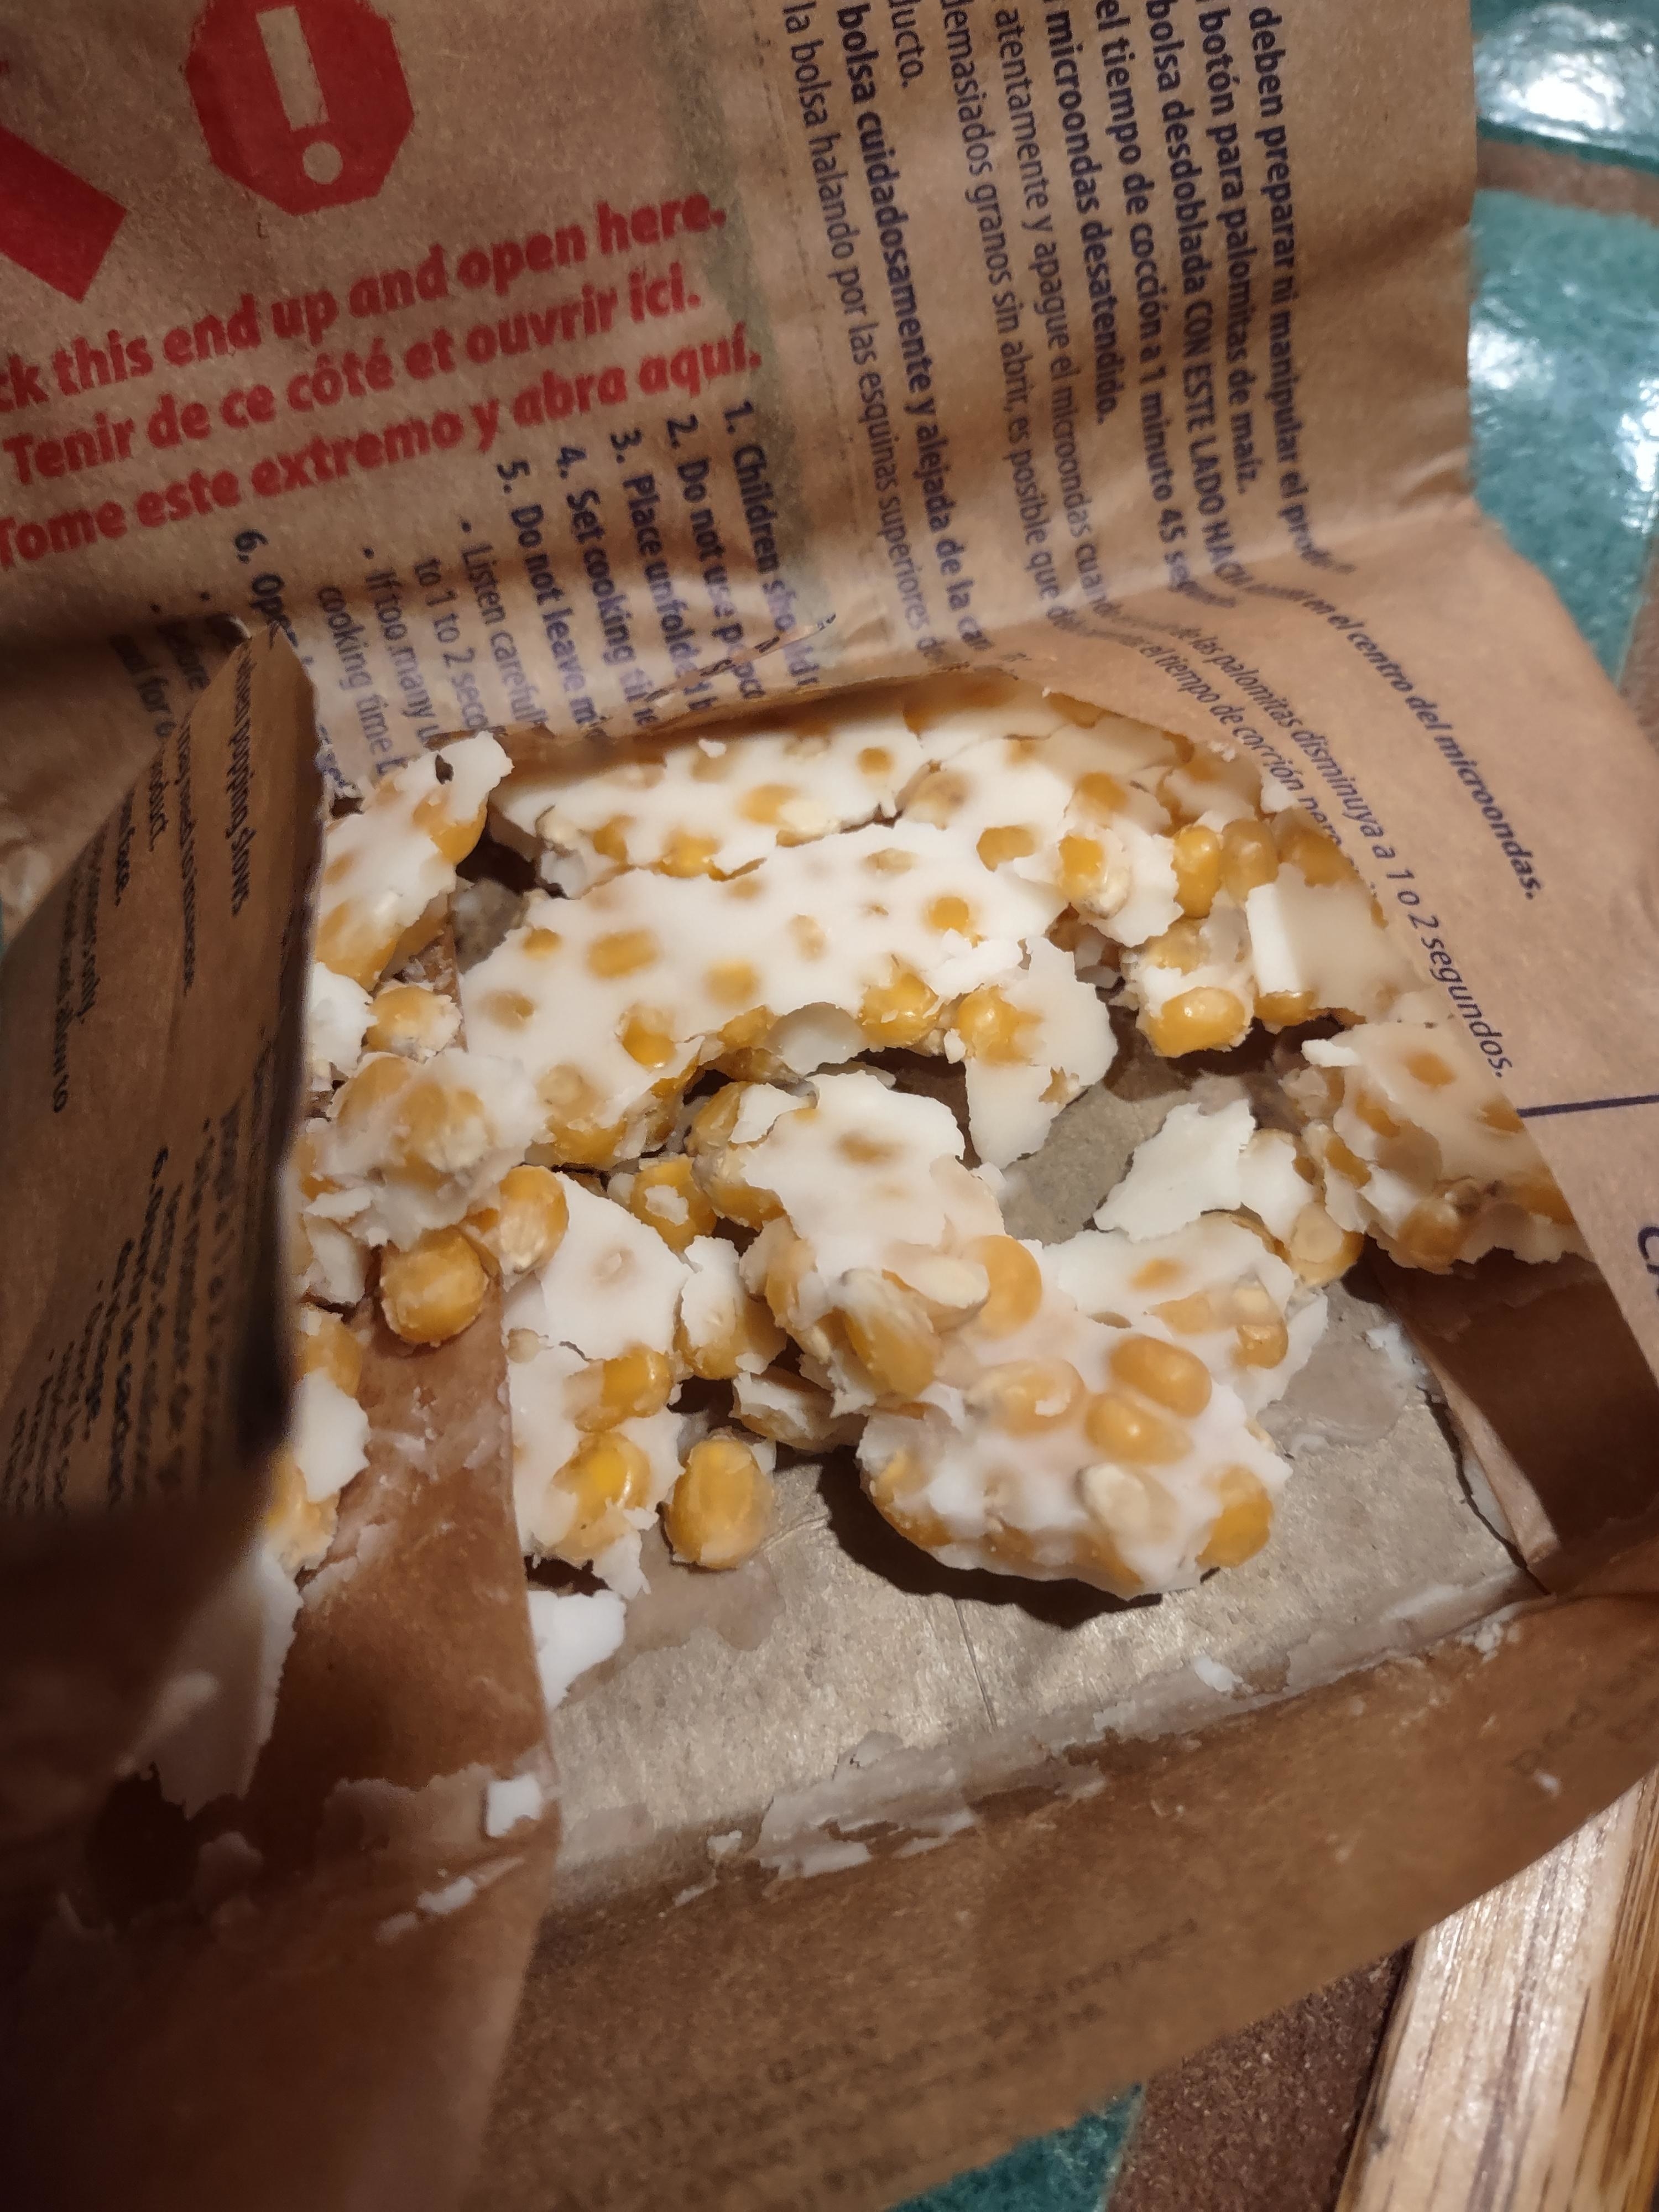 Inside a bag of microwave popcorn